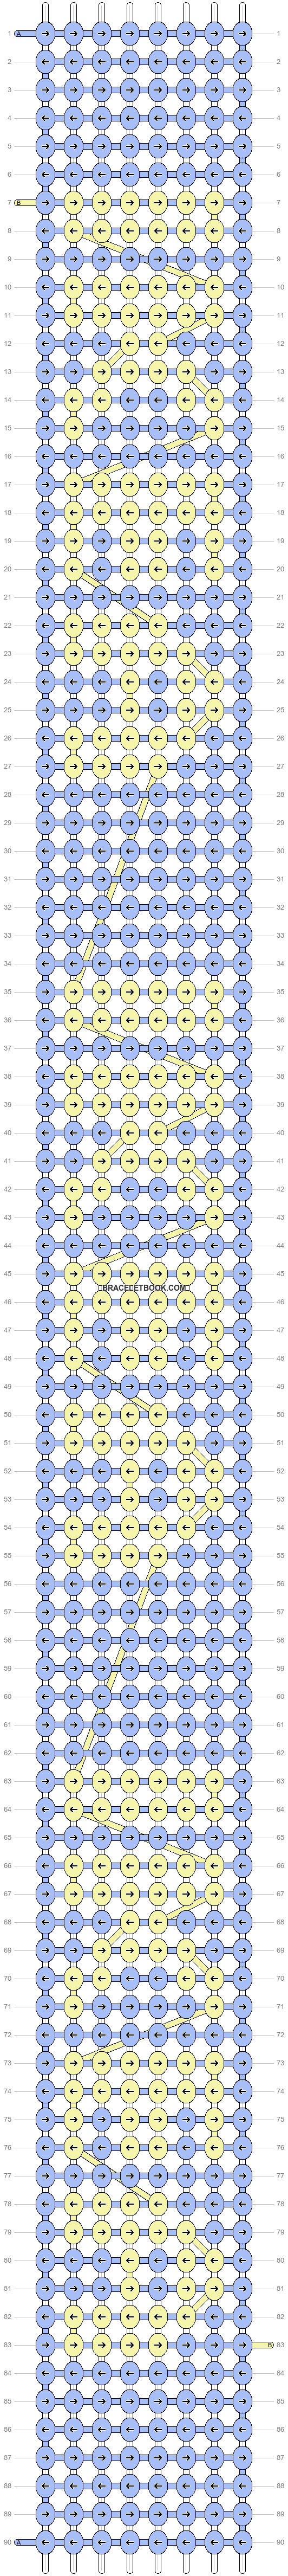 Alpha pattern #27305 variation #64439 pattern